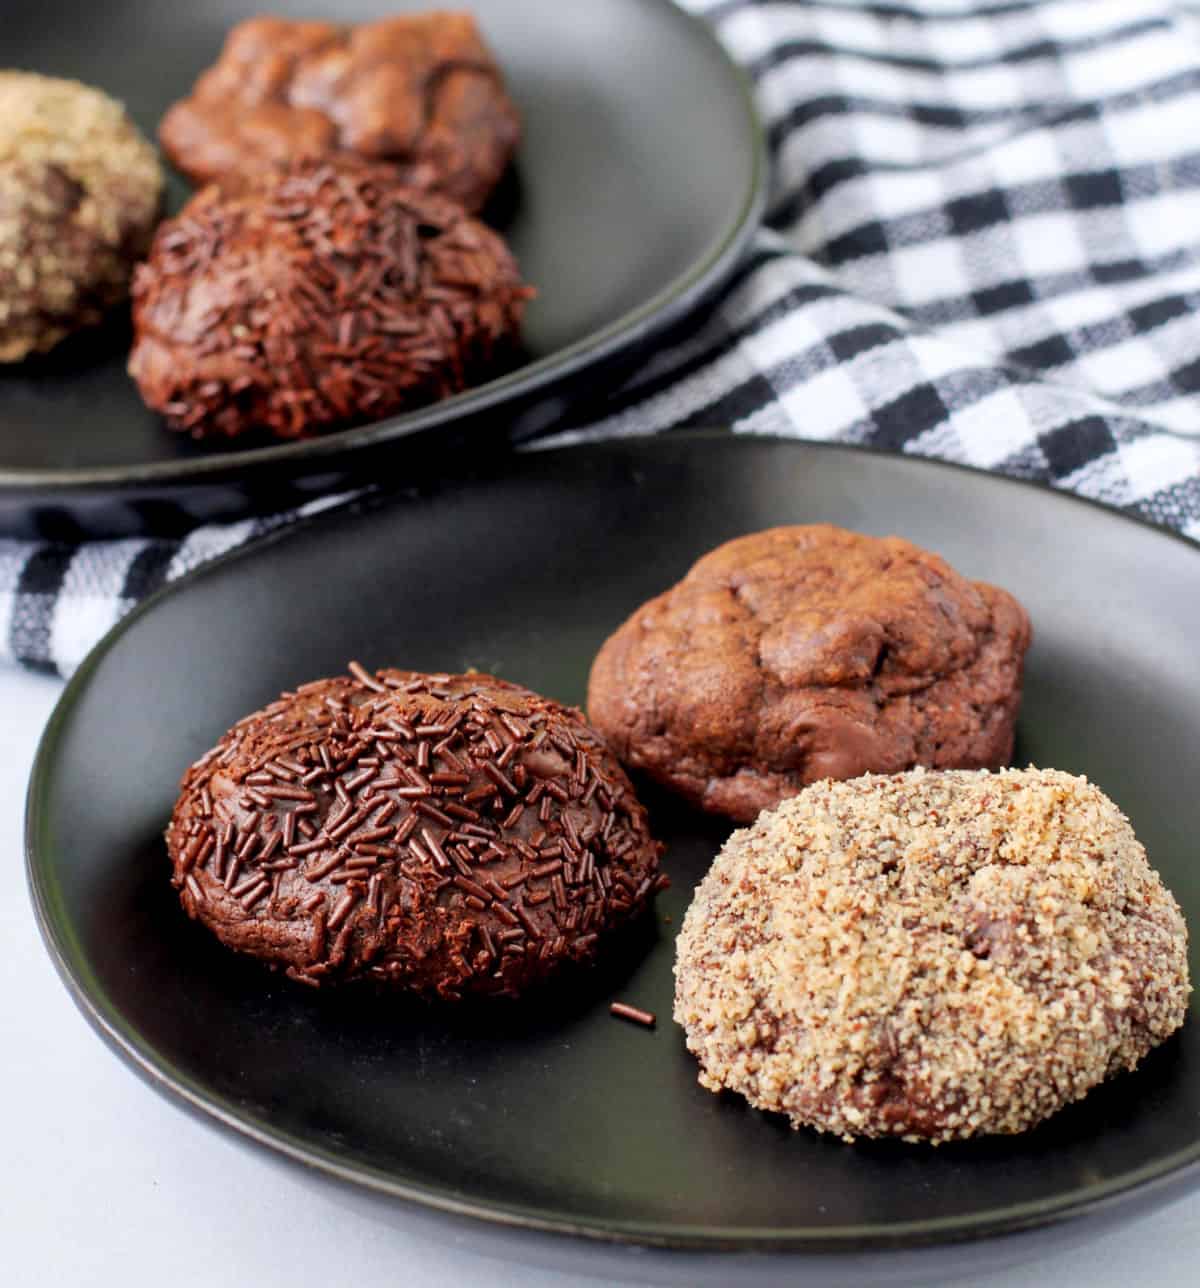 Three kinds of Chocolate Truffle Cookies on black plates.